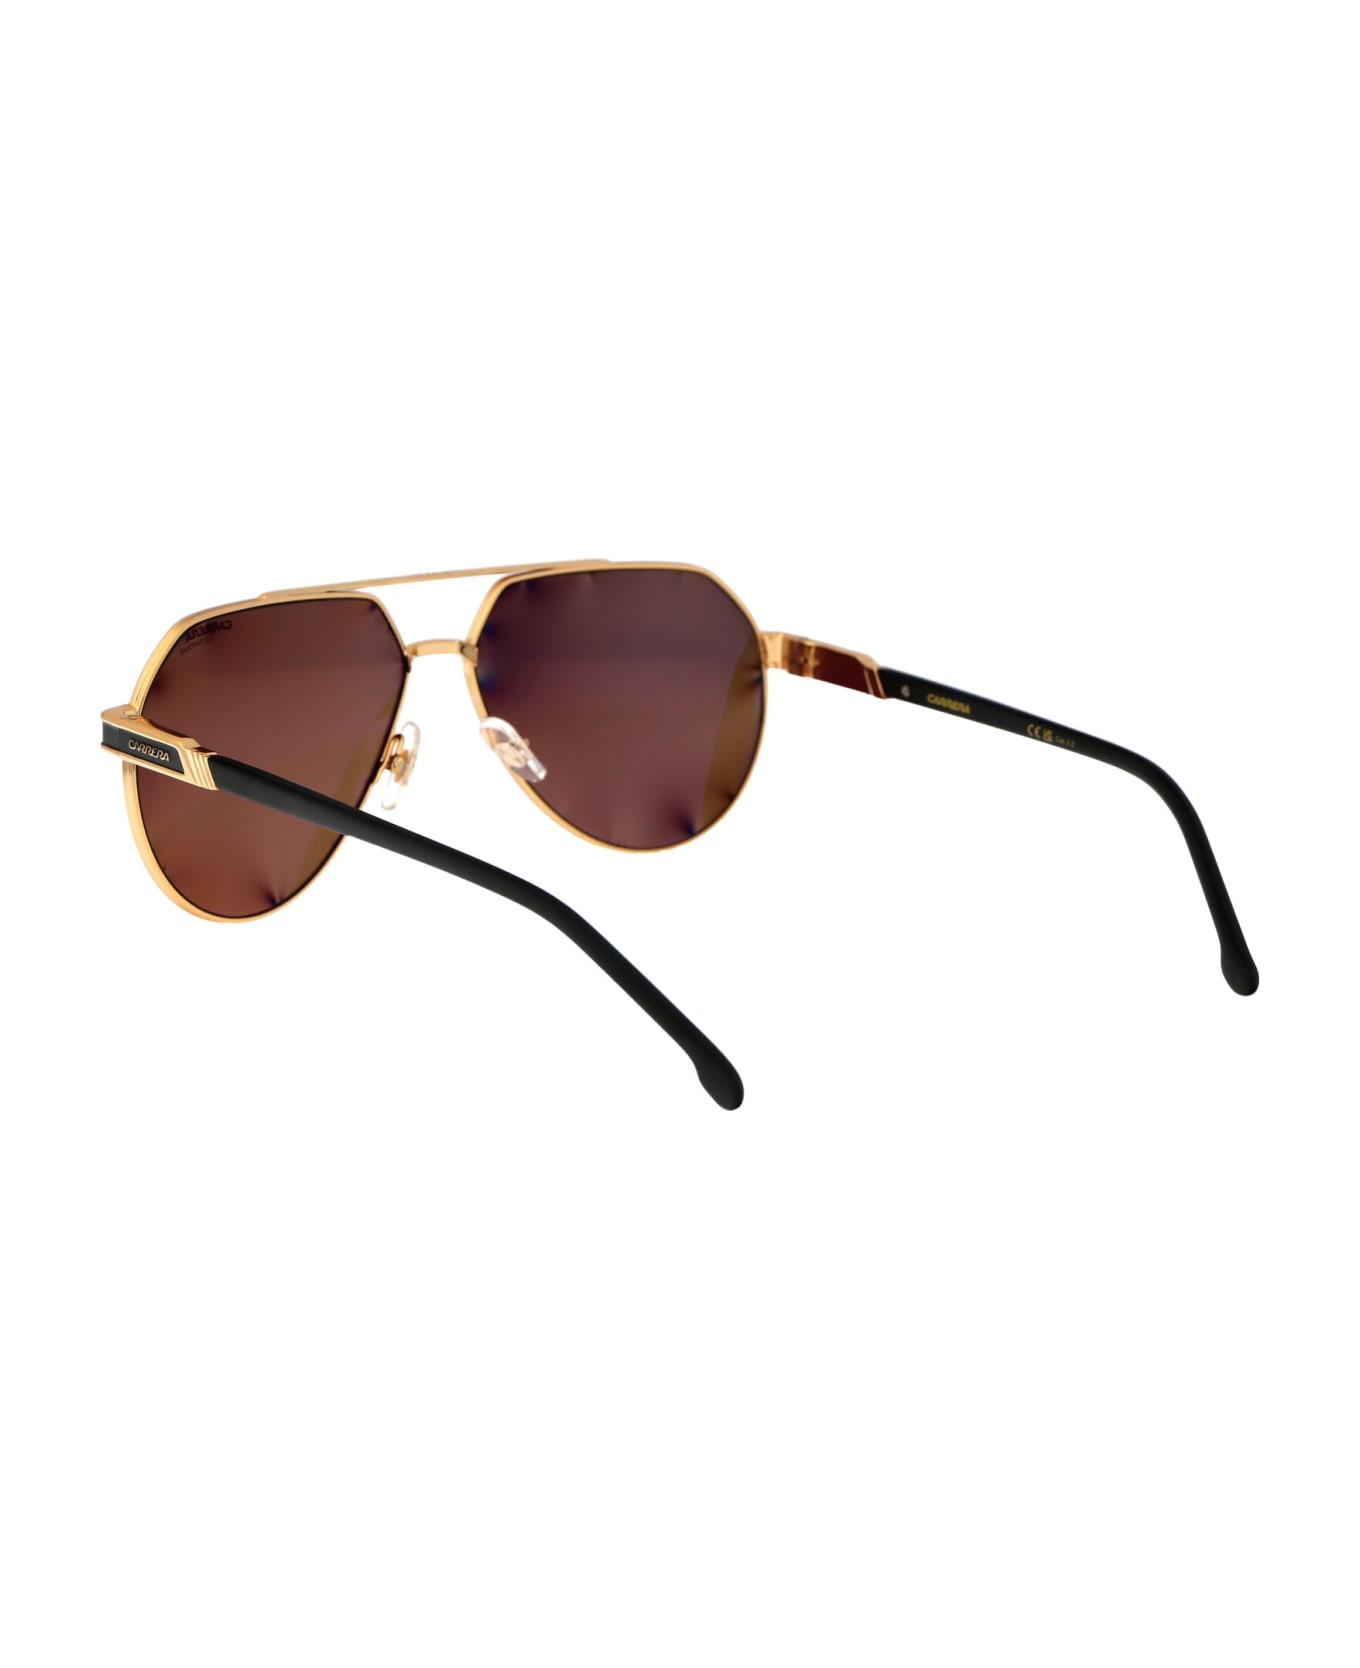 Carrera 1067/s Sunglasses - I46YL MT BK GD